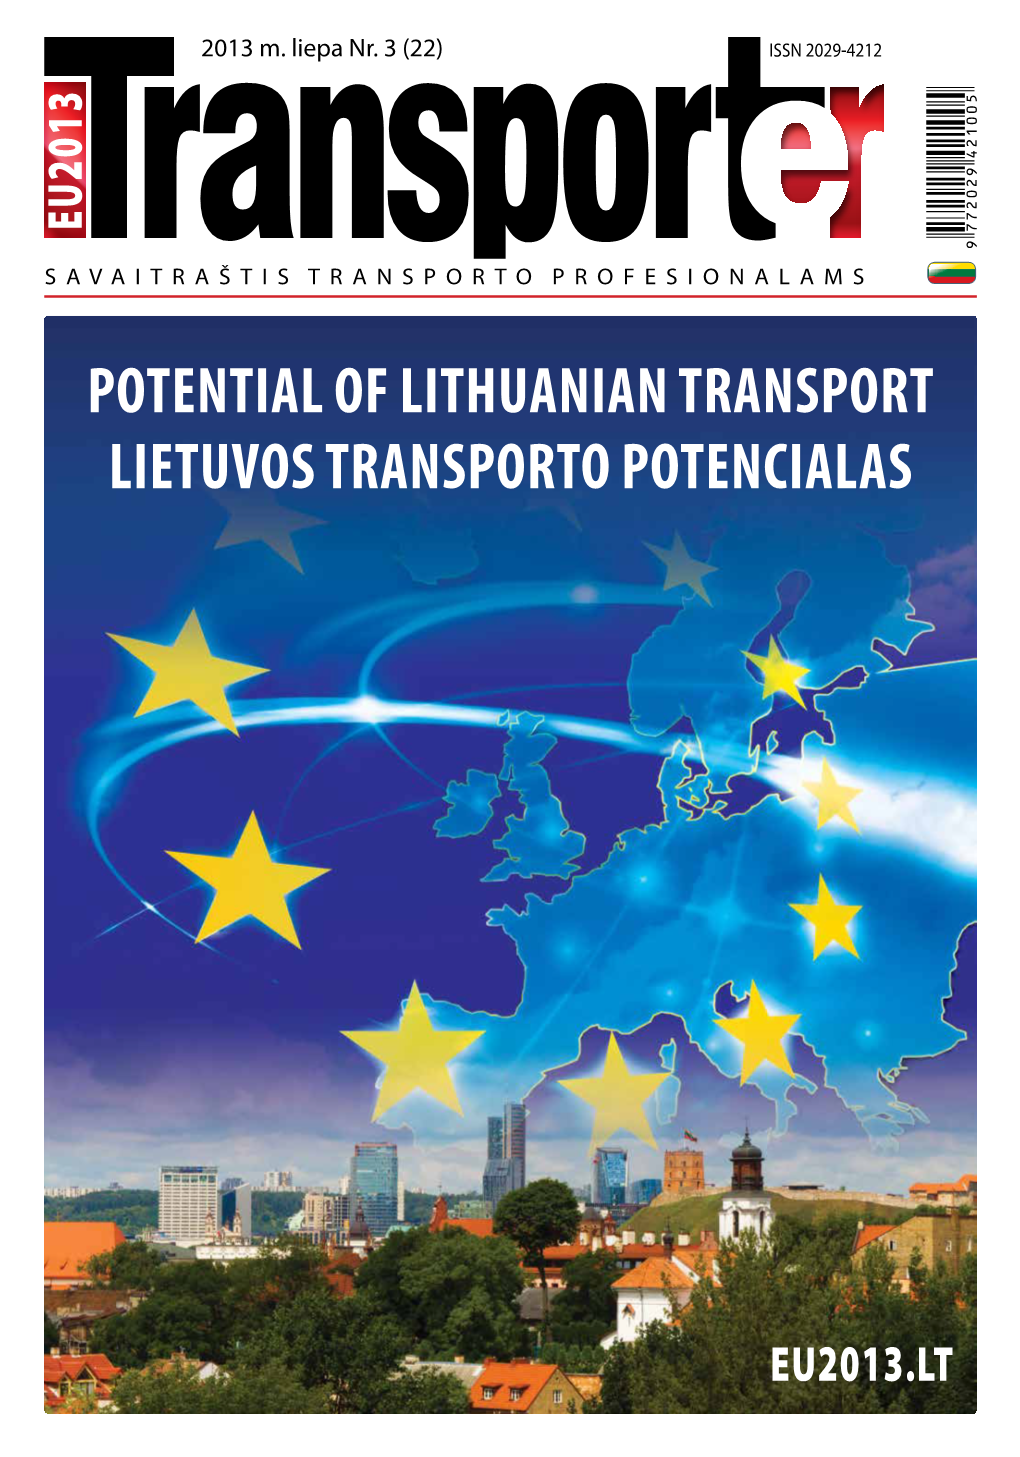 Potential of Lithuanian Transport Lietuvos Transporto Potencialas